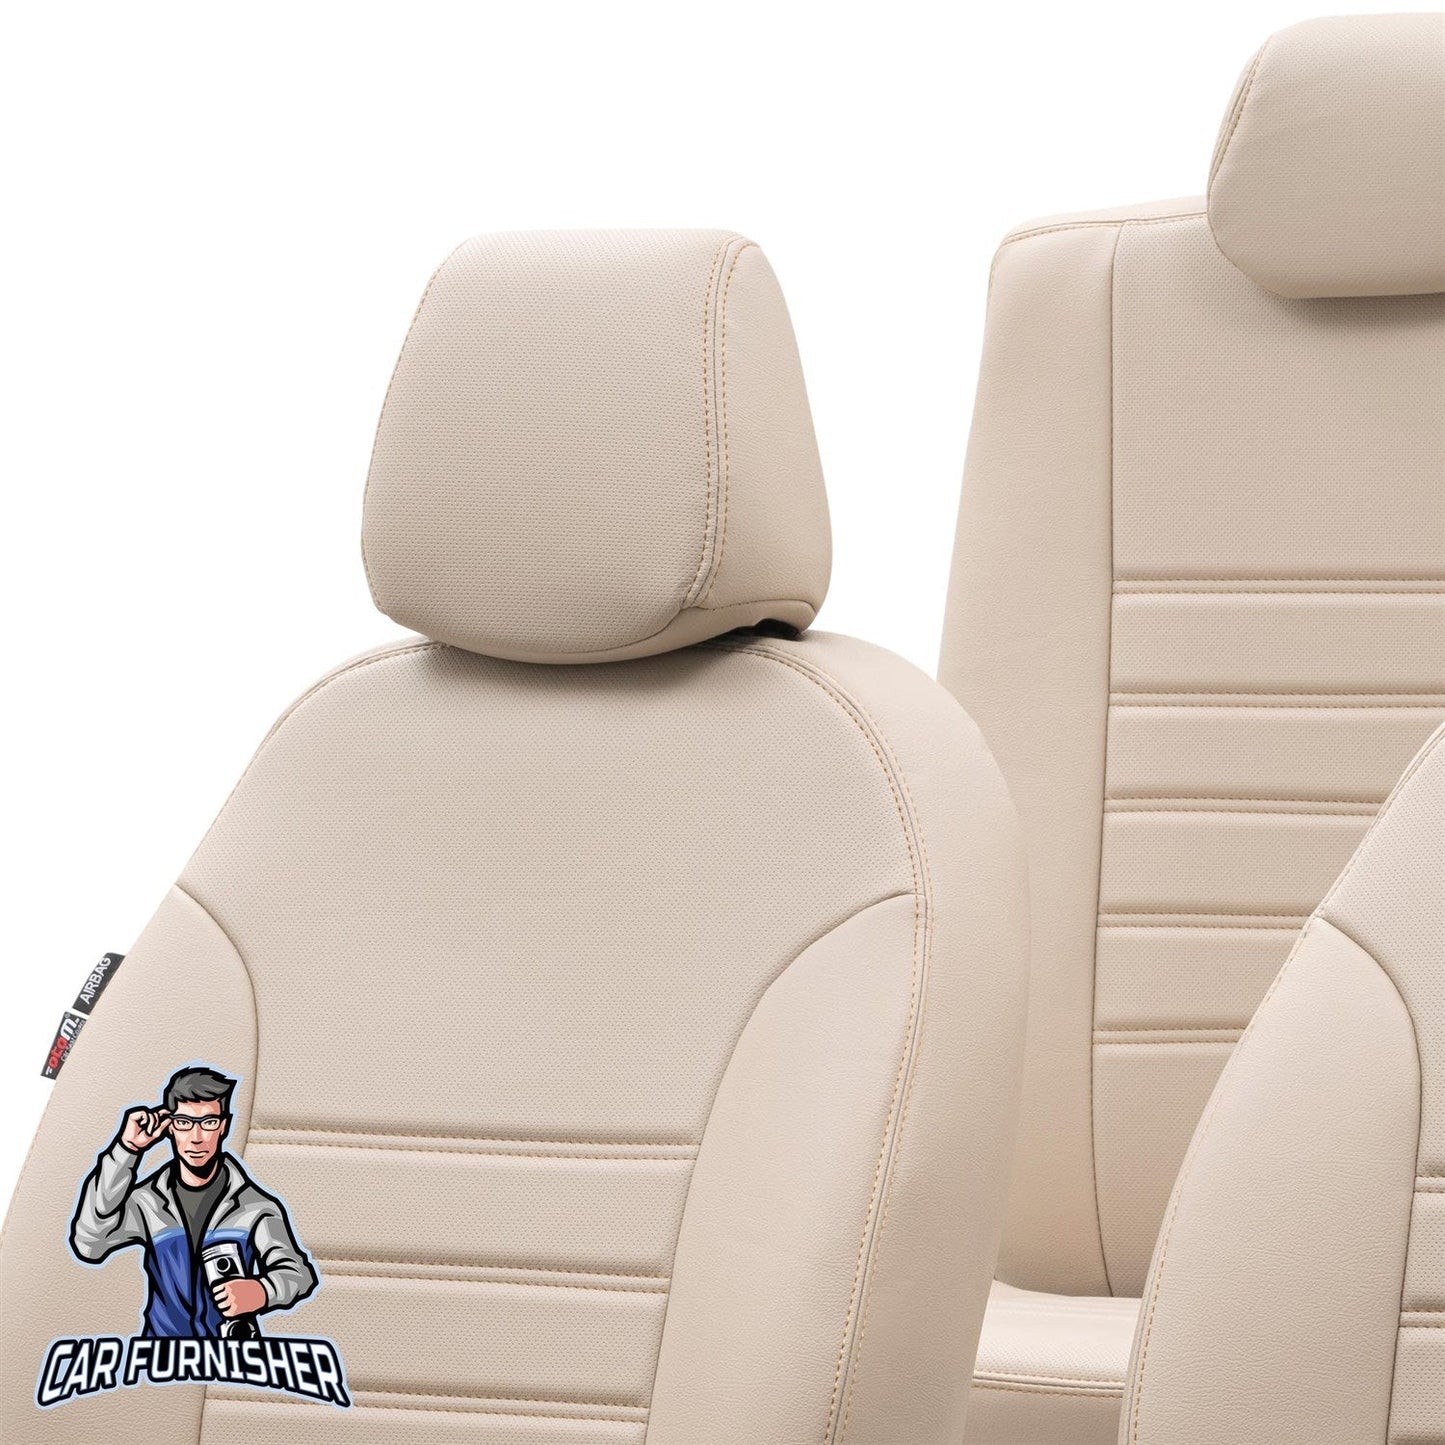 Kia Venga Seat Cover Istanbul Leather Design Beige Leather